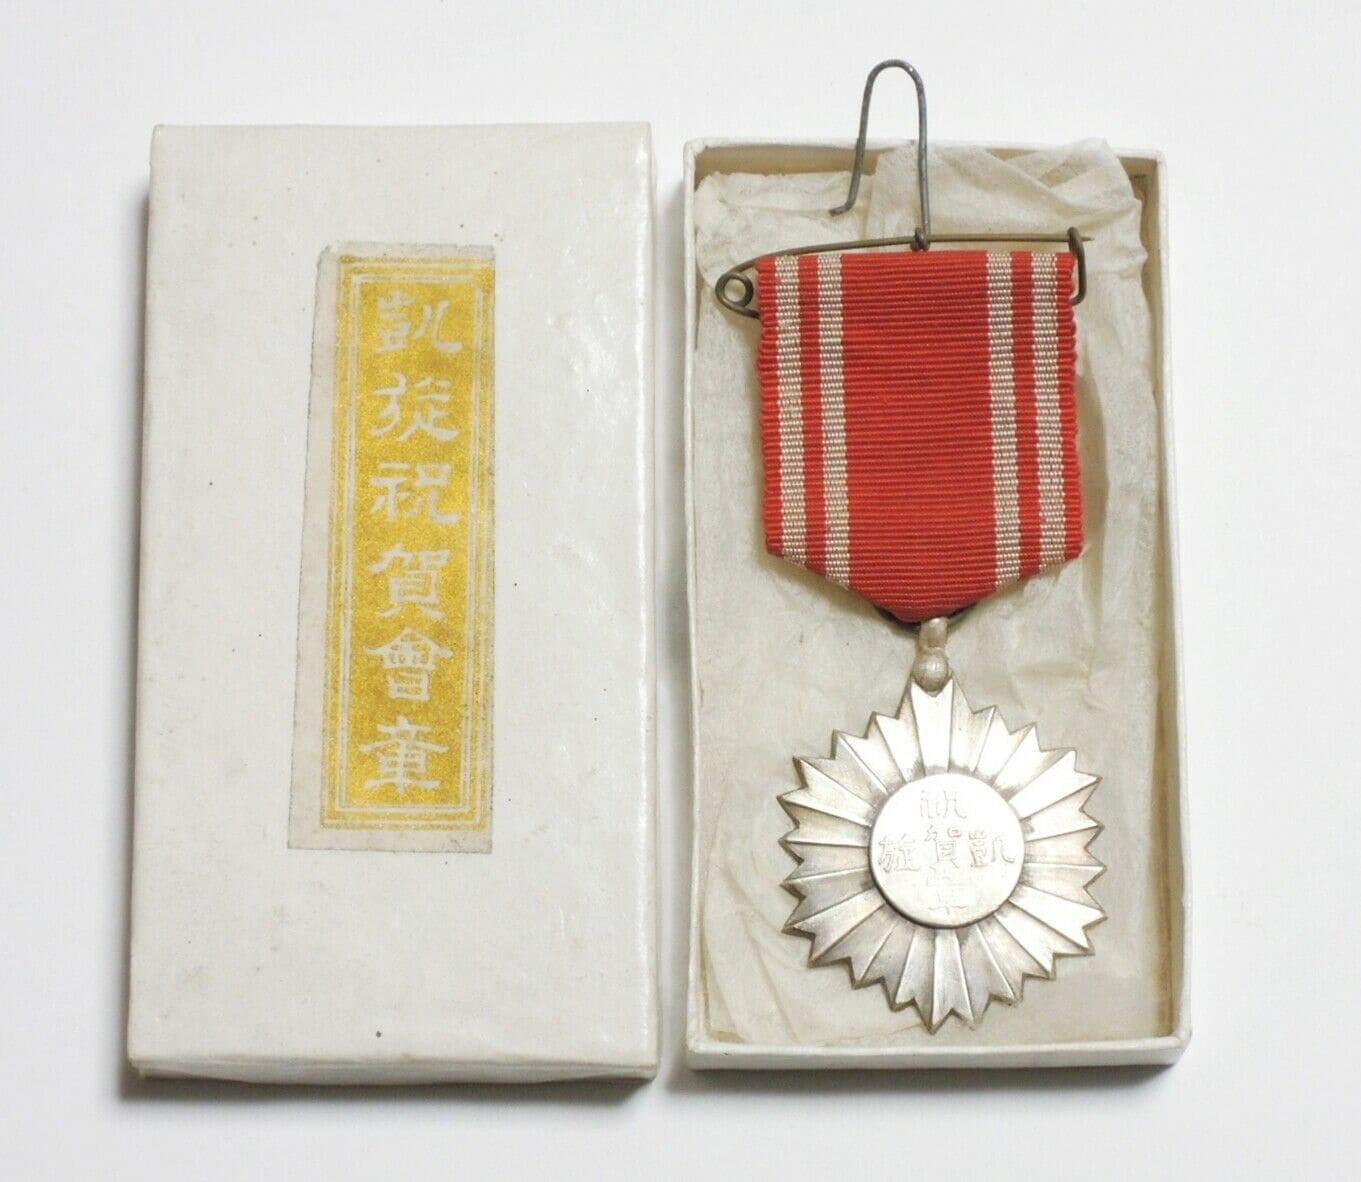 Triumphant  Return  Celebration Association Medal 凱旋祝賀會章.jpg